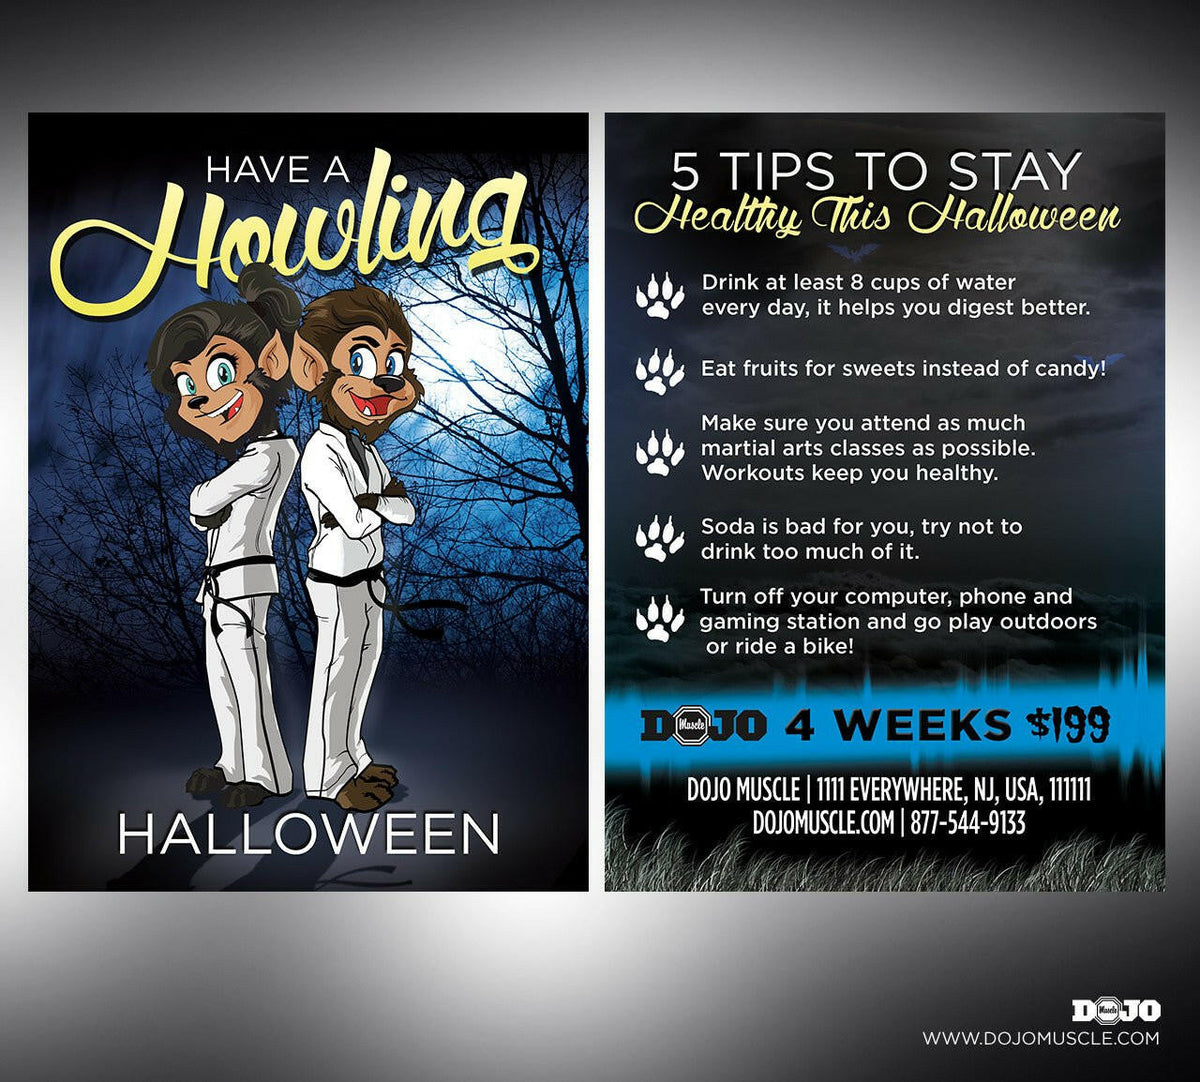 Howling Halloween - Tips Card - Dojo Muscle